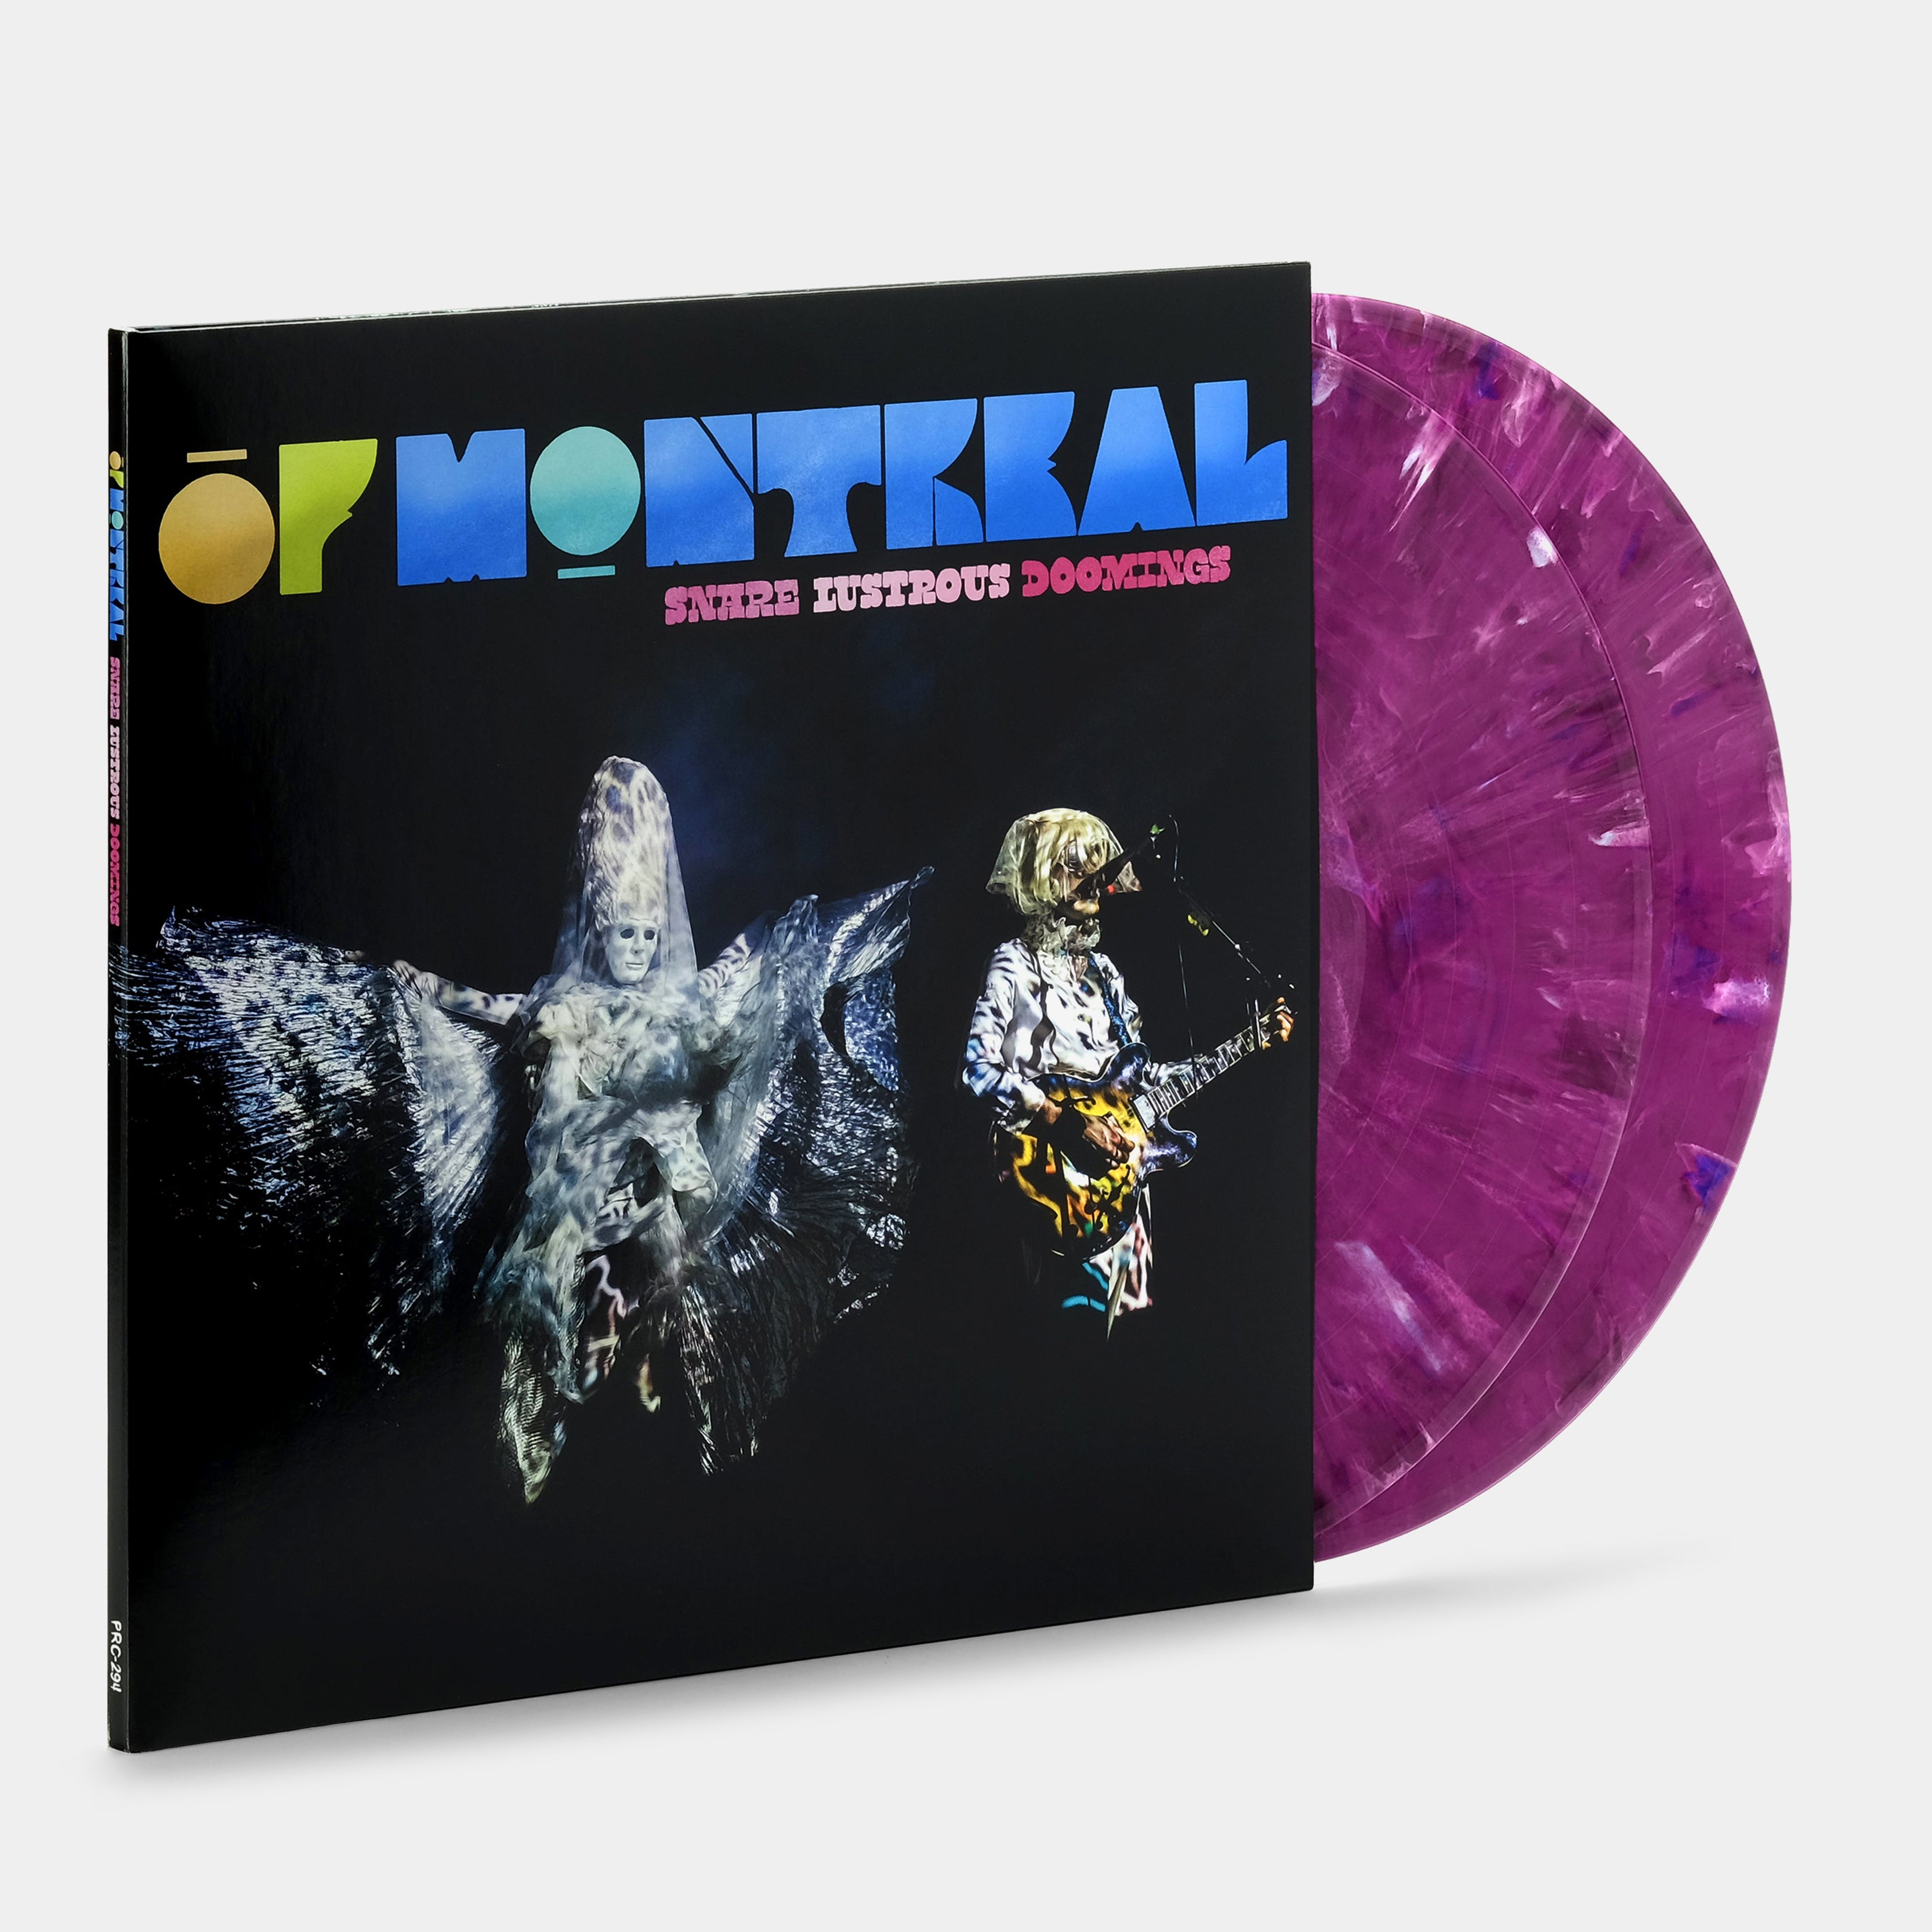 Of Montreal - Snare Lustrous Doomings 2xLP Purple Vinyl Record